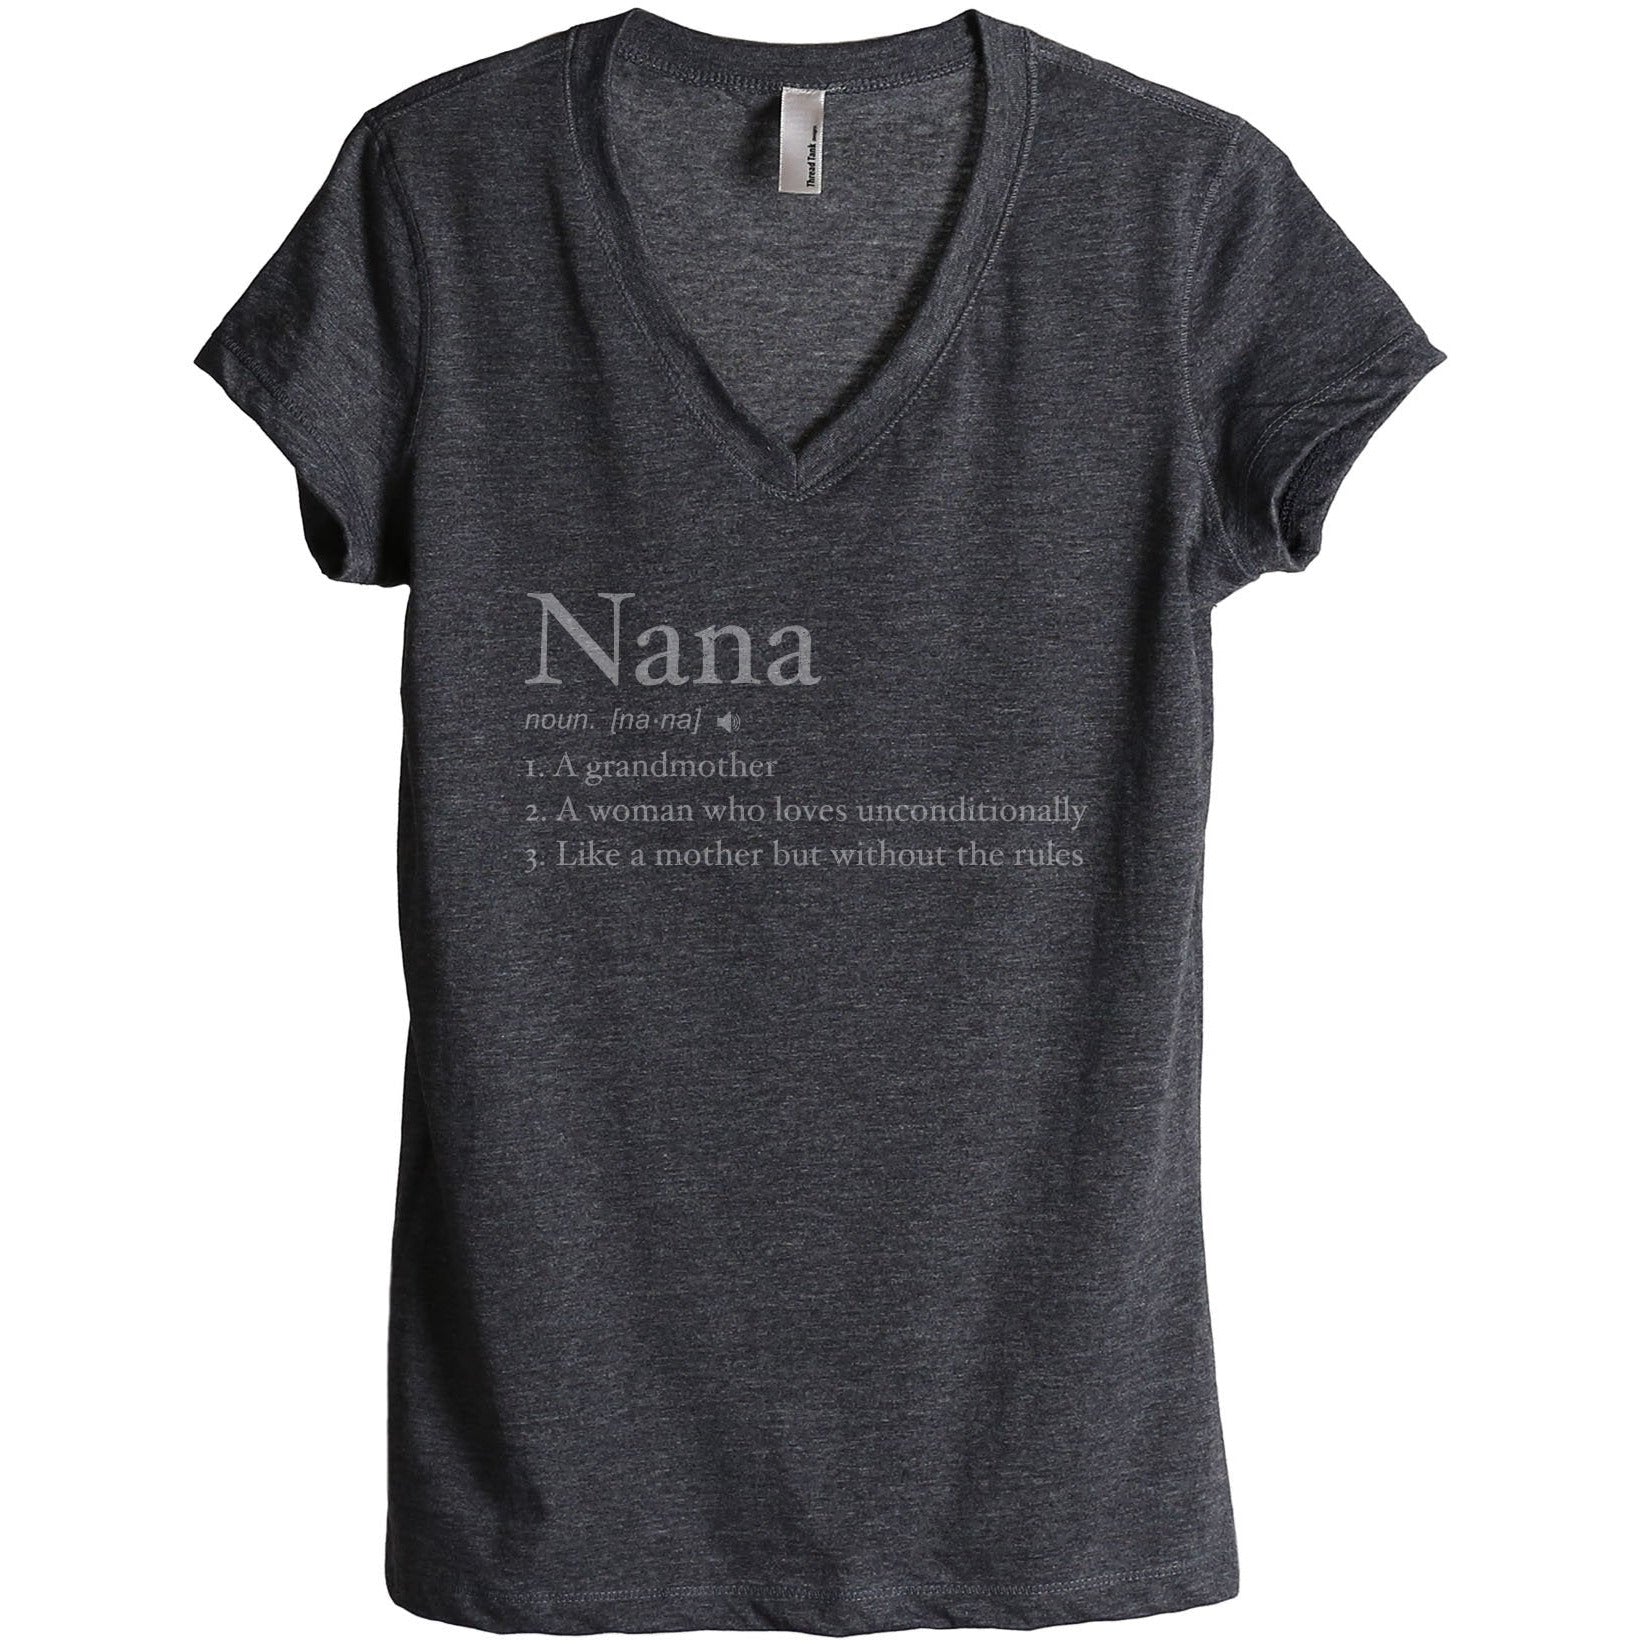 Nana Definition